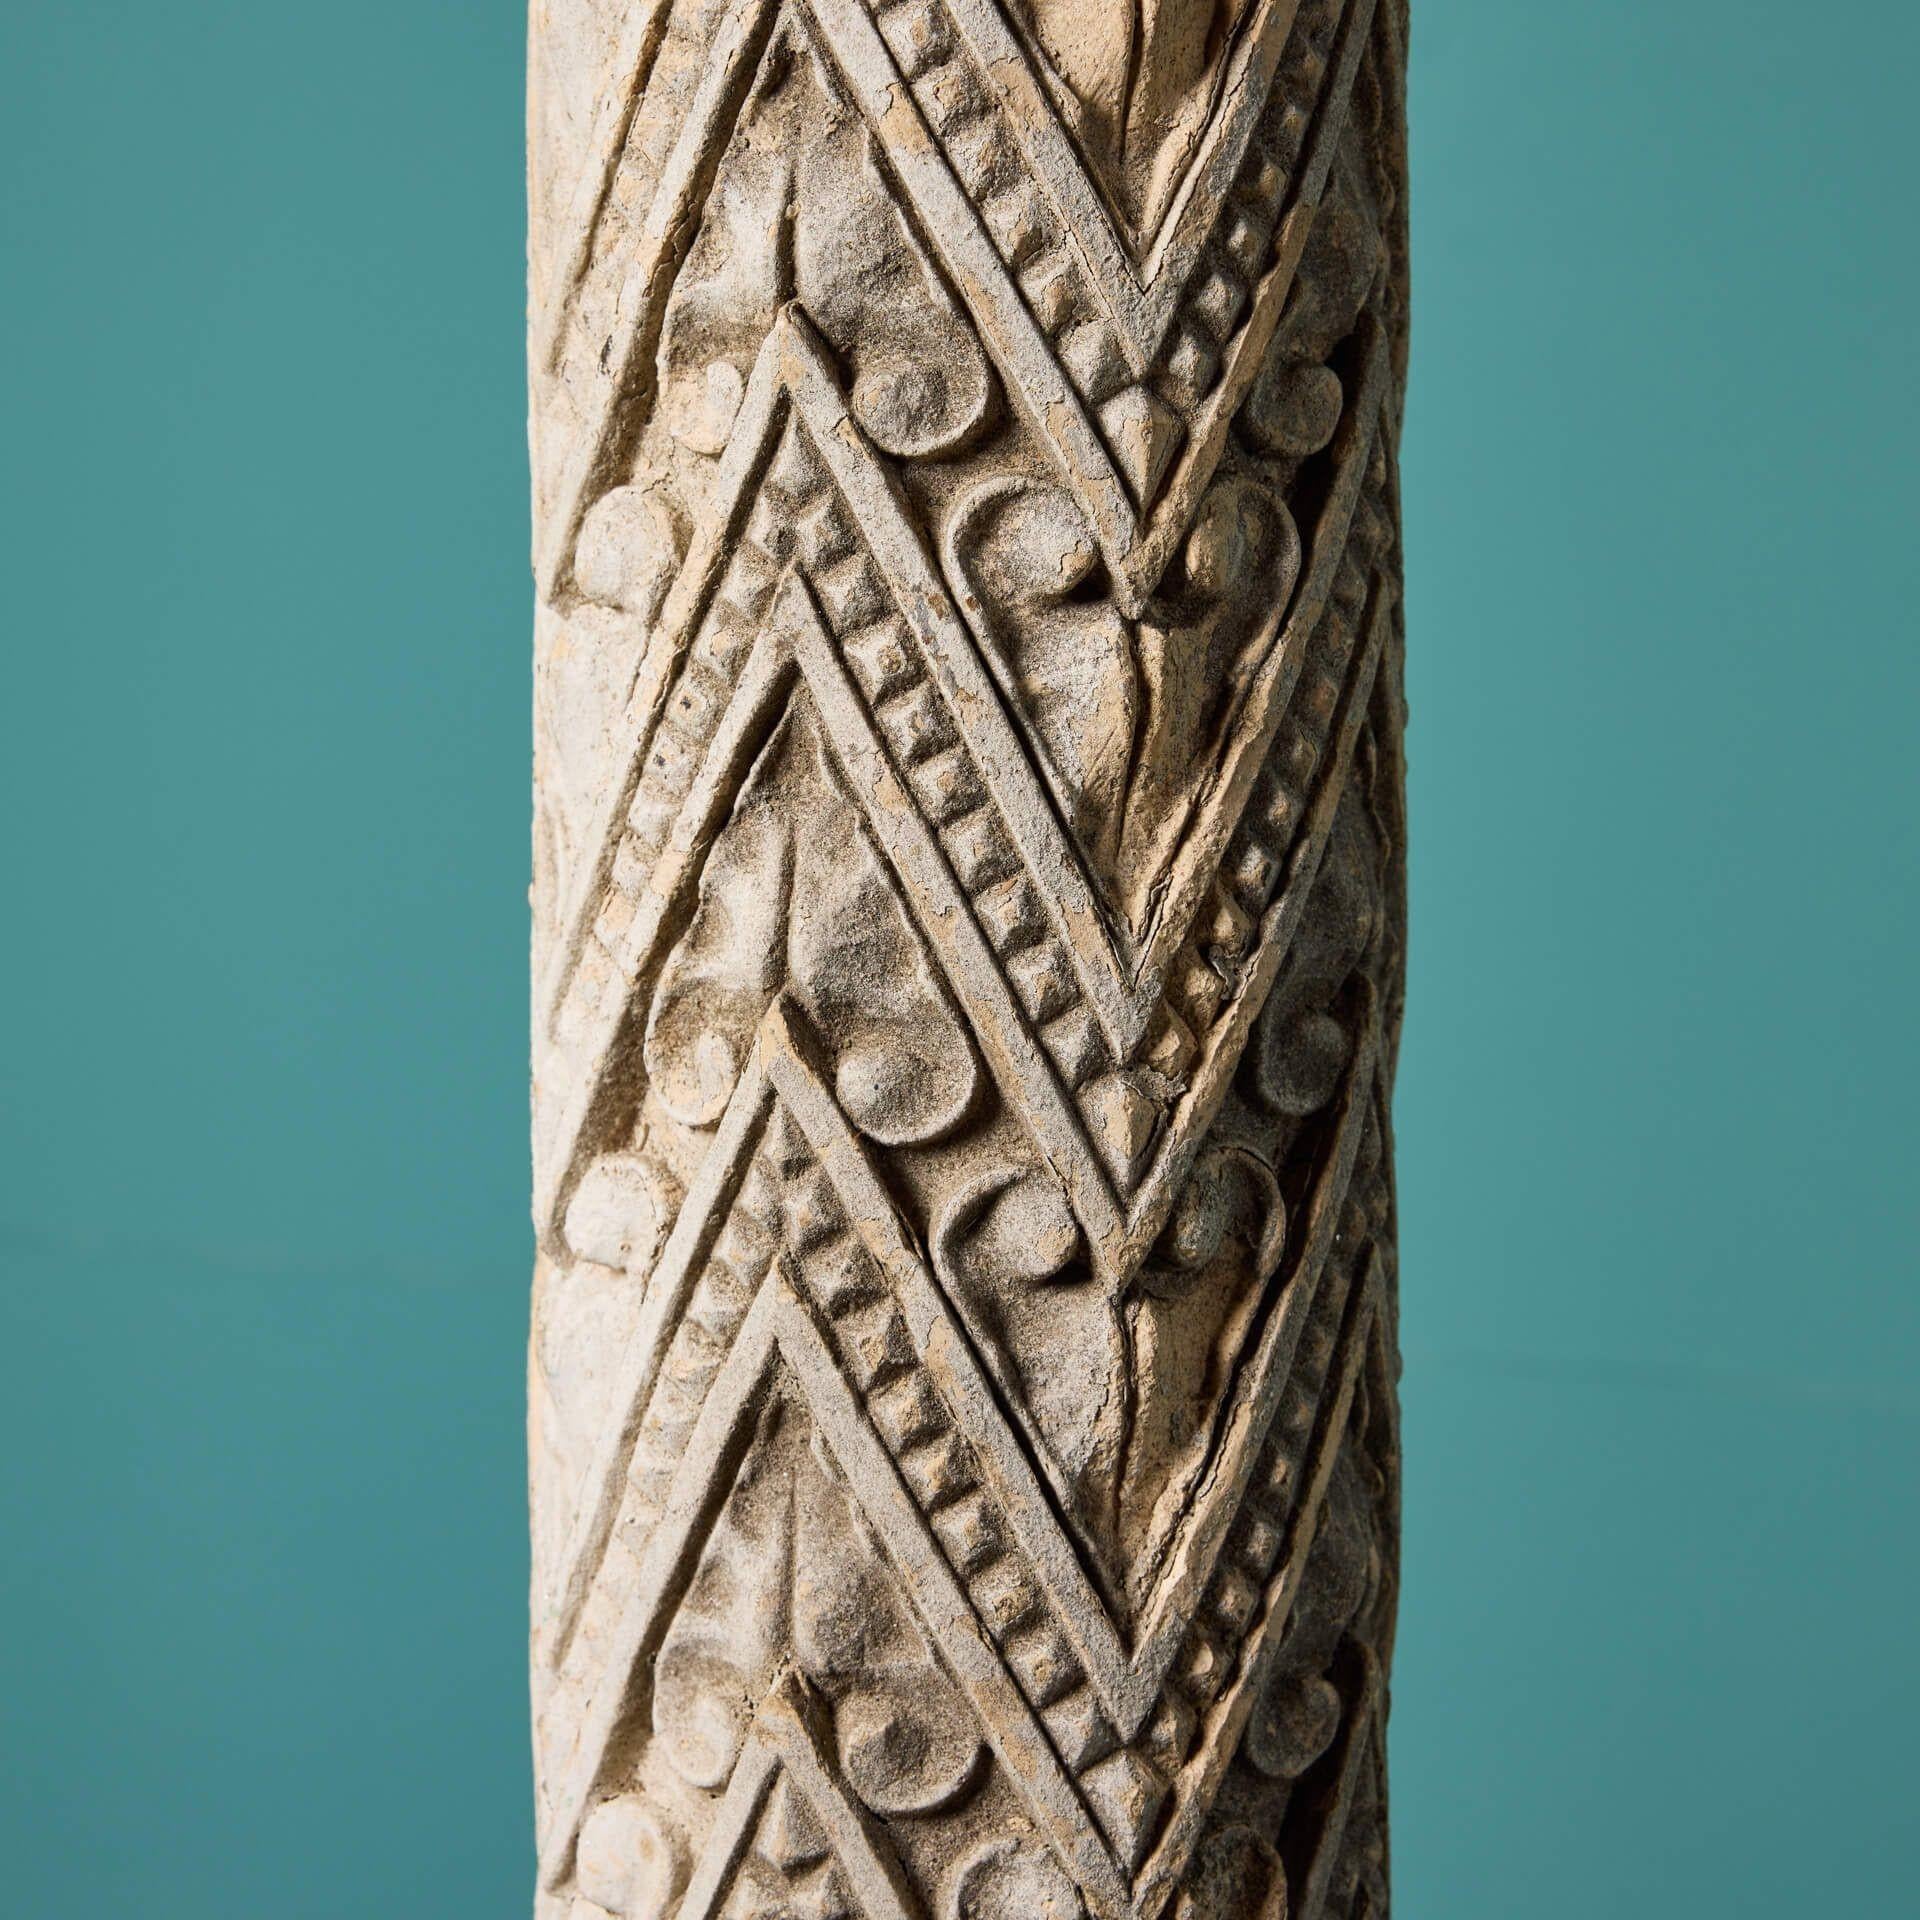 English Coade Stone Style Column Fragment For Sale